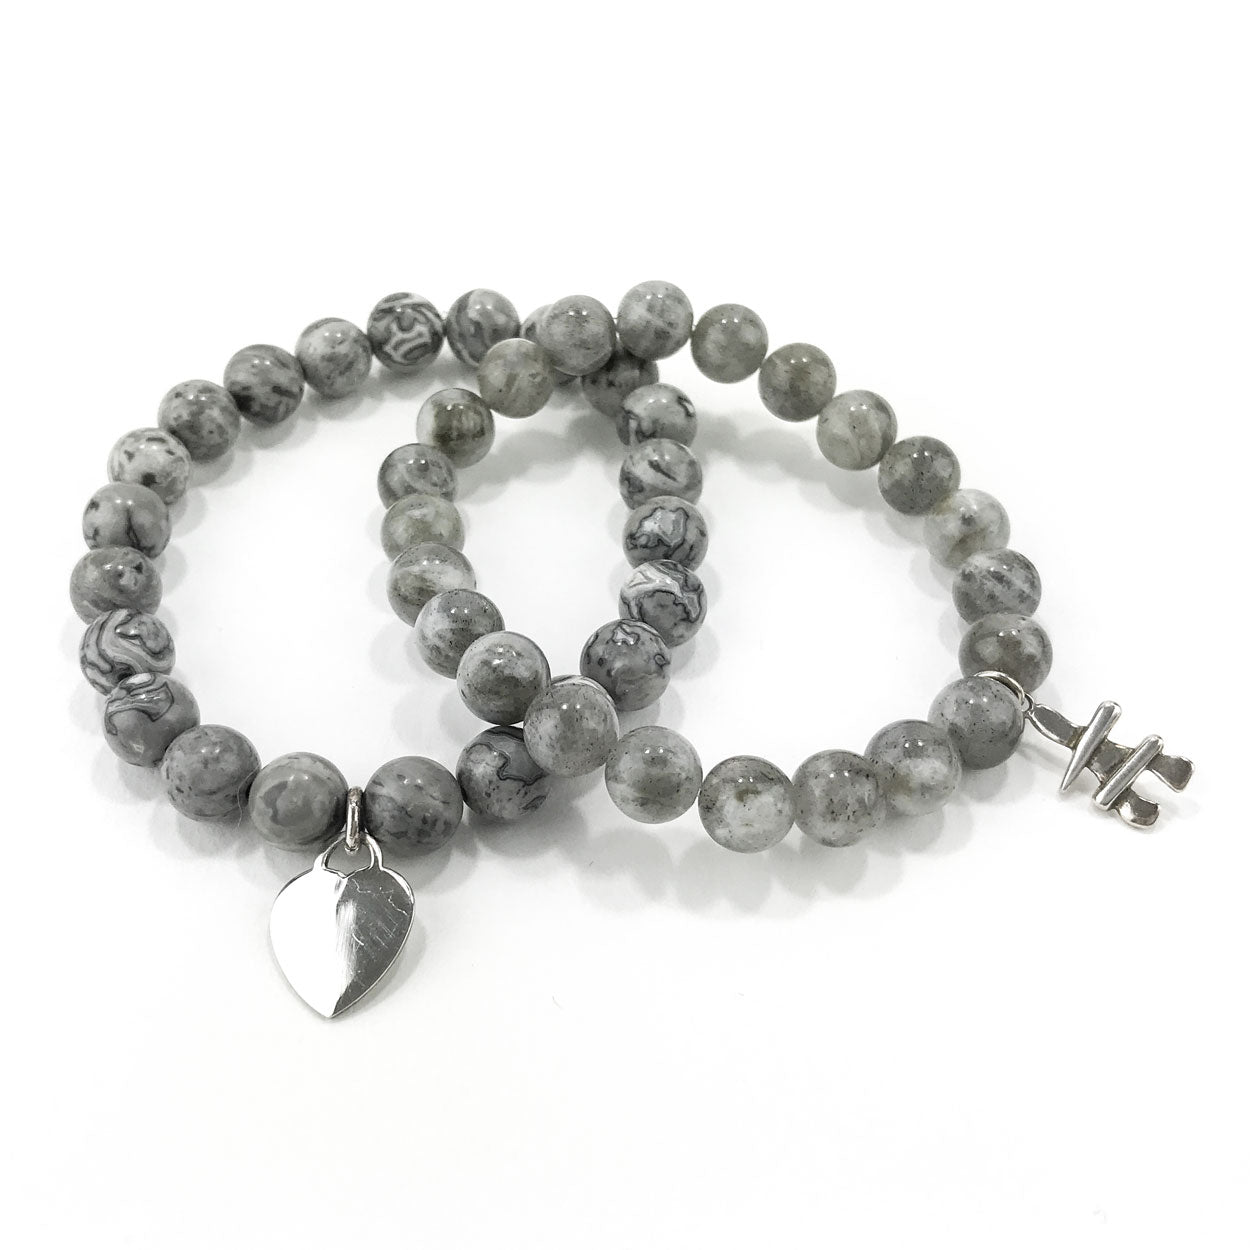 Stone Bracelet - Grey Quartz with Sterling Silver Inukshuk Charm